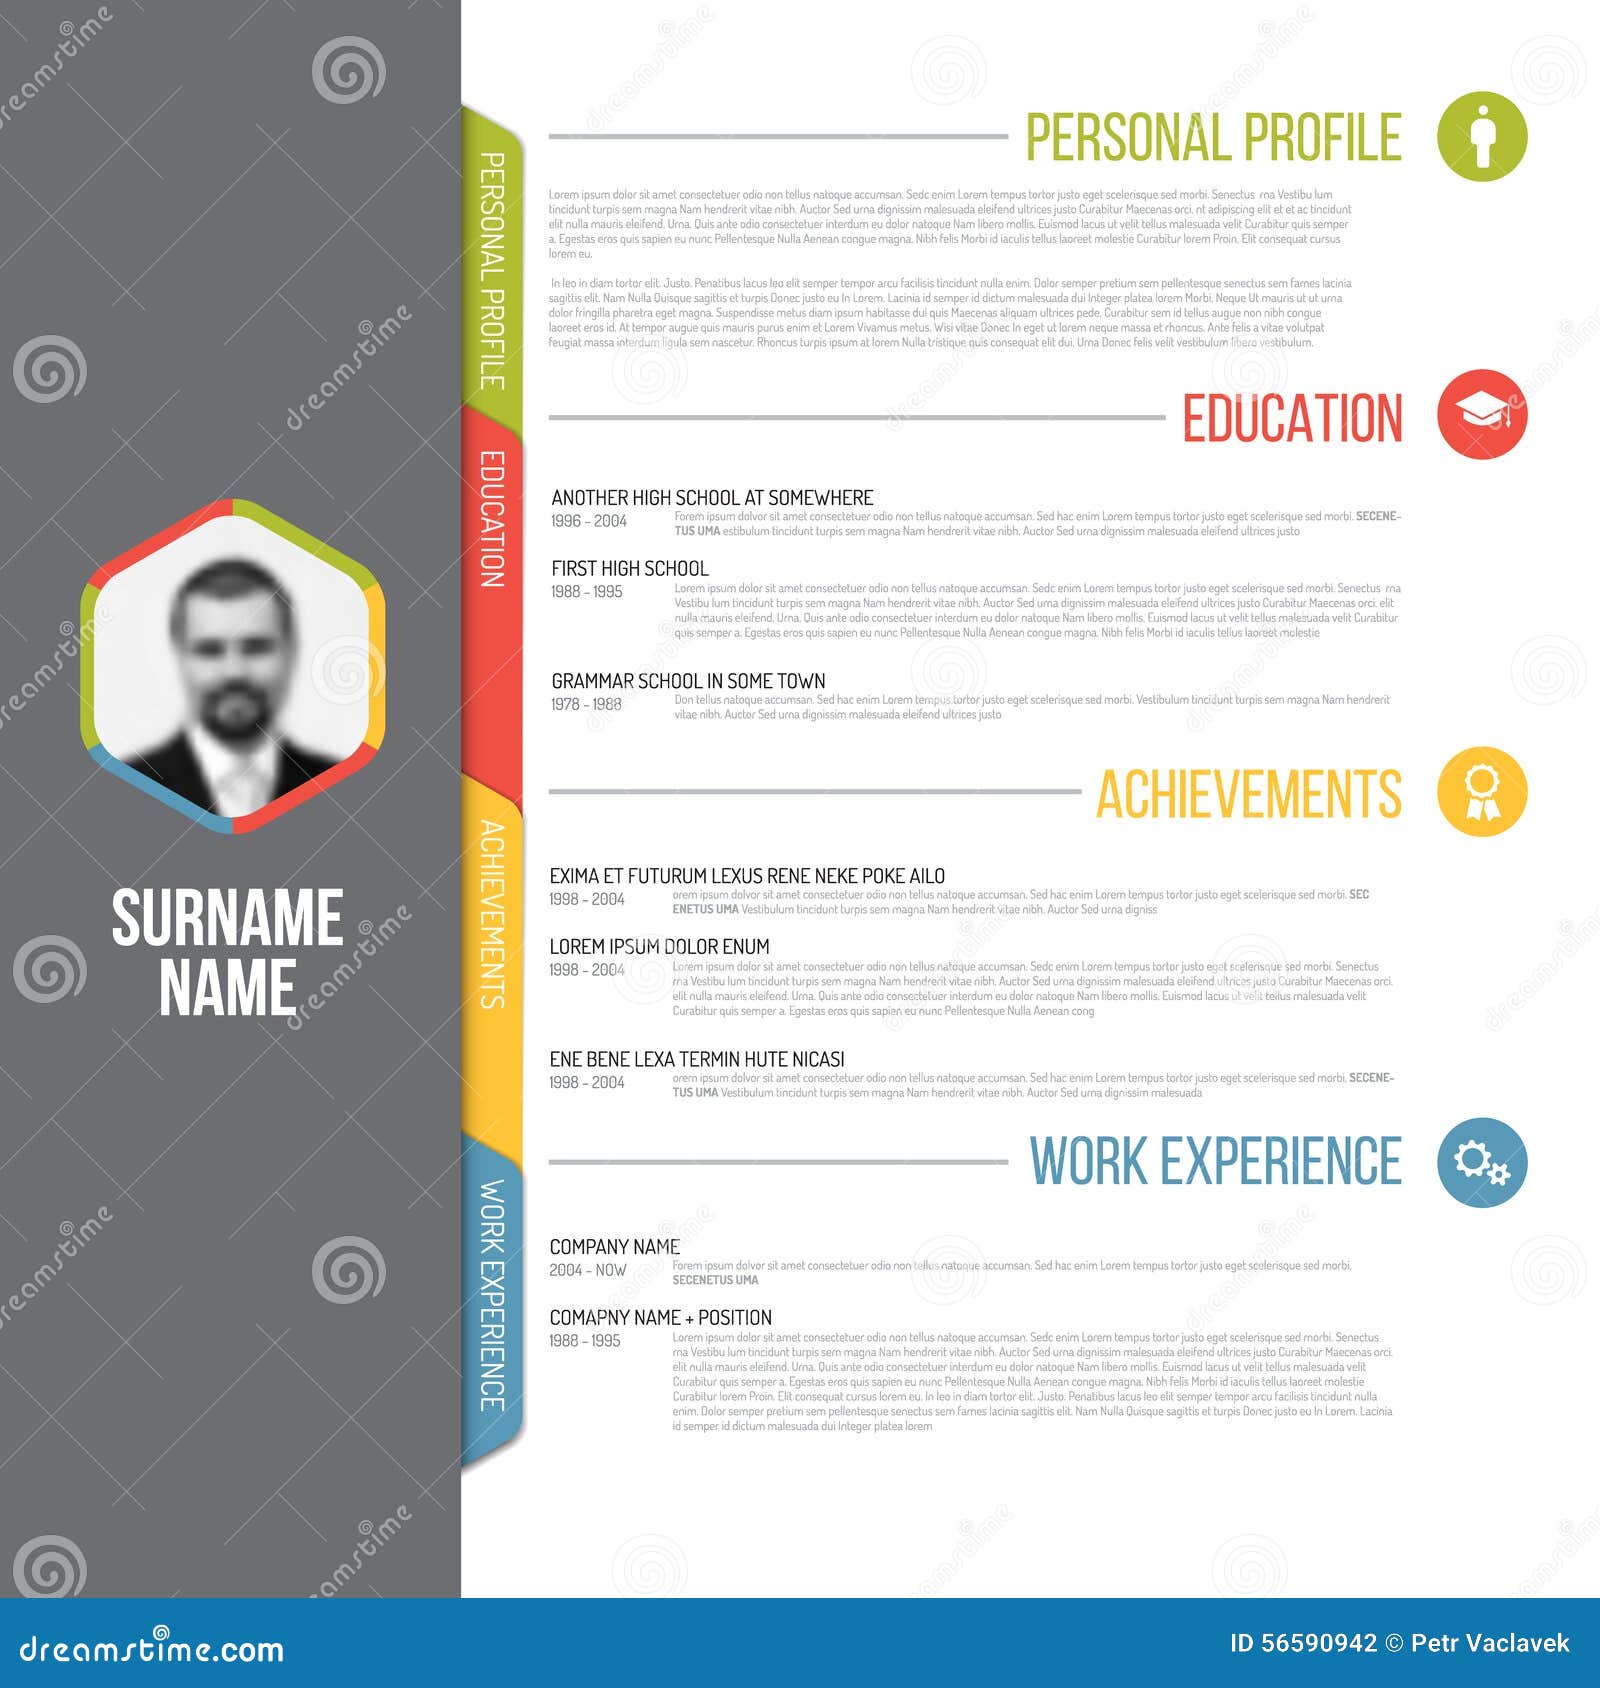 personal profile template vector illustration